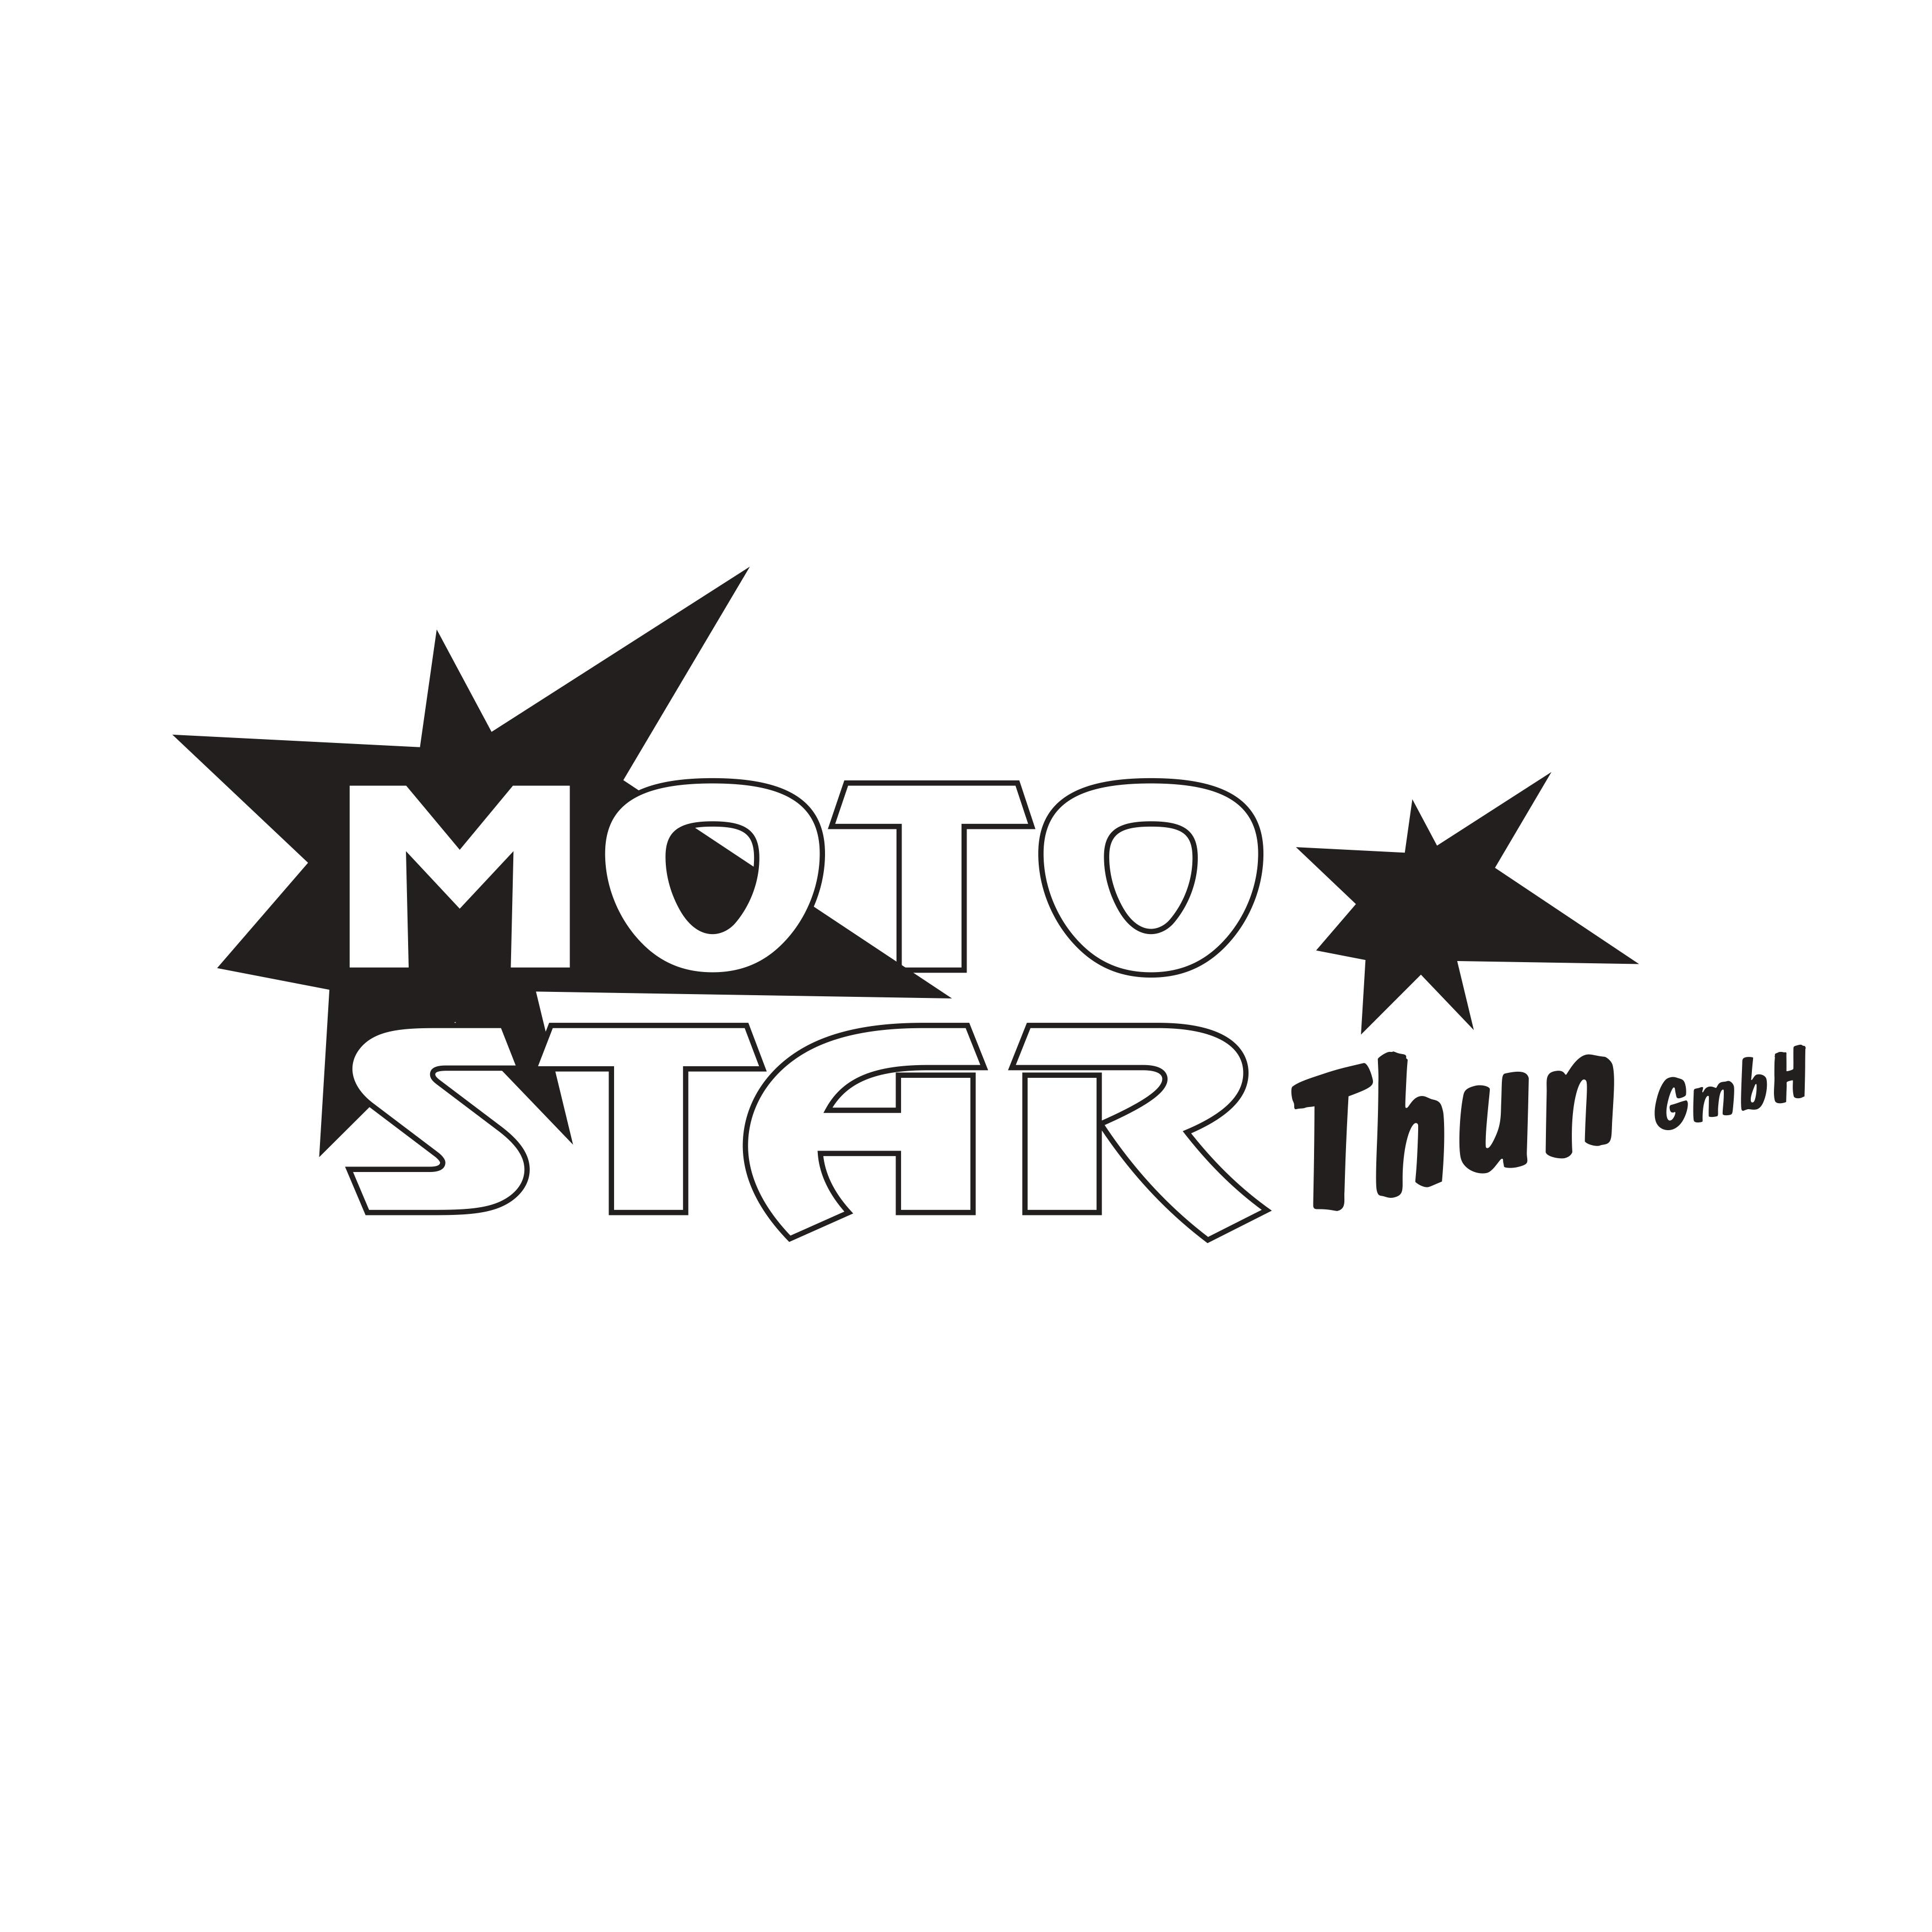 Moto-Star Thun GmbH Logo